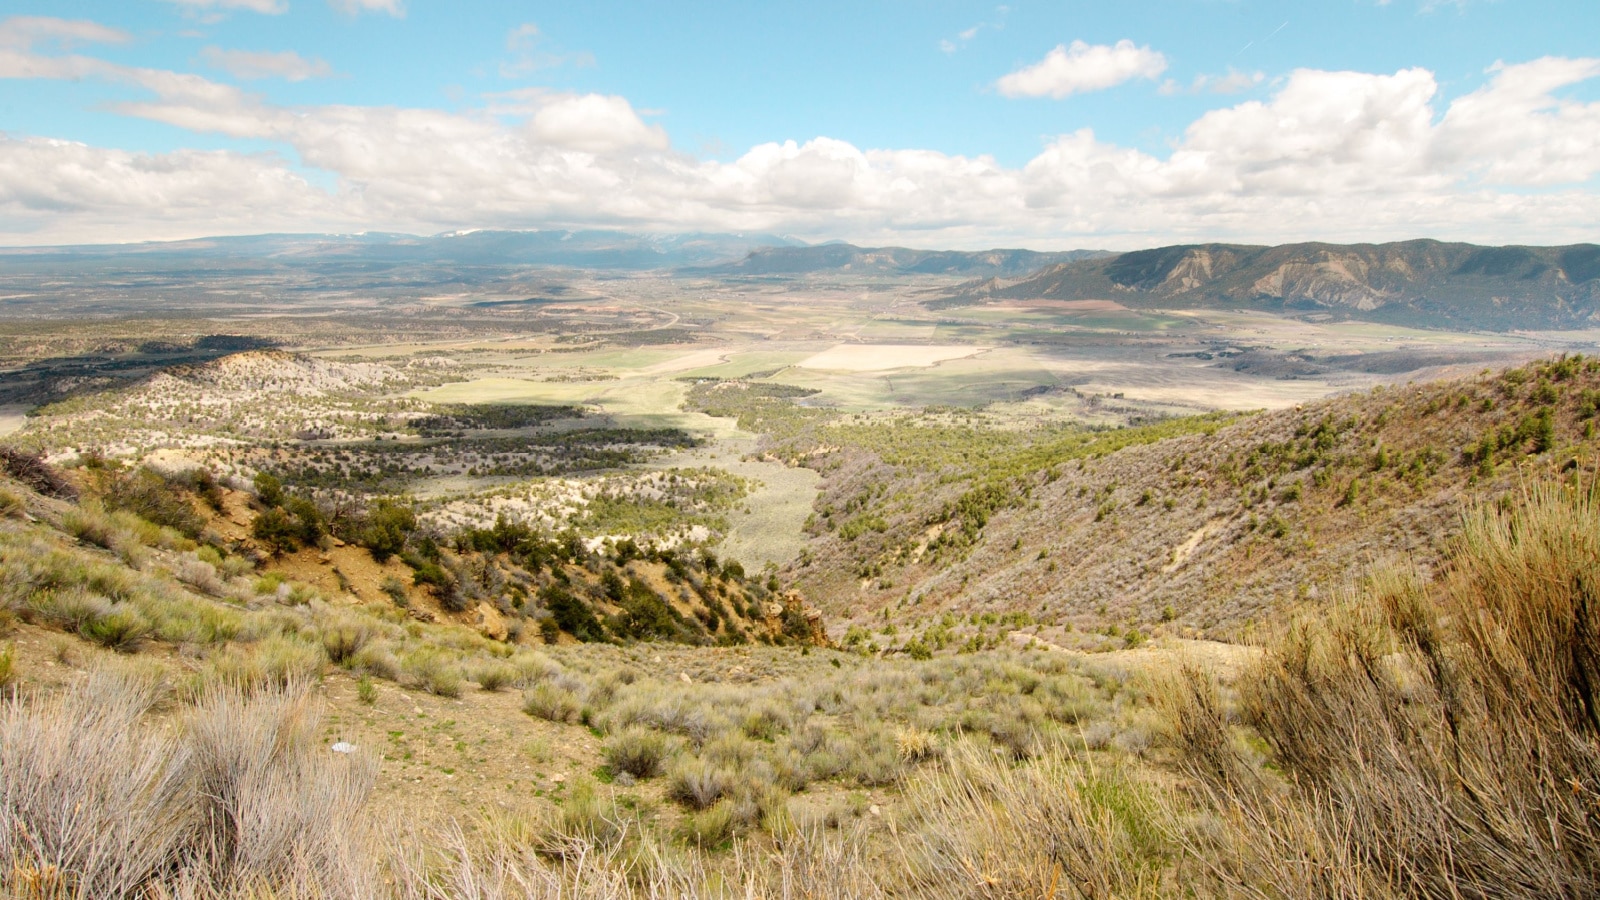 Mancos Valley Overlook of the Colorado desert